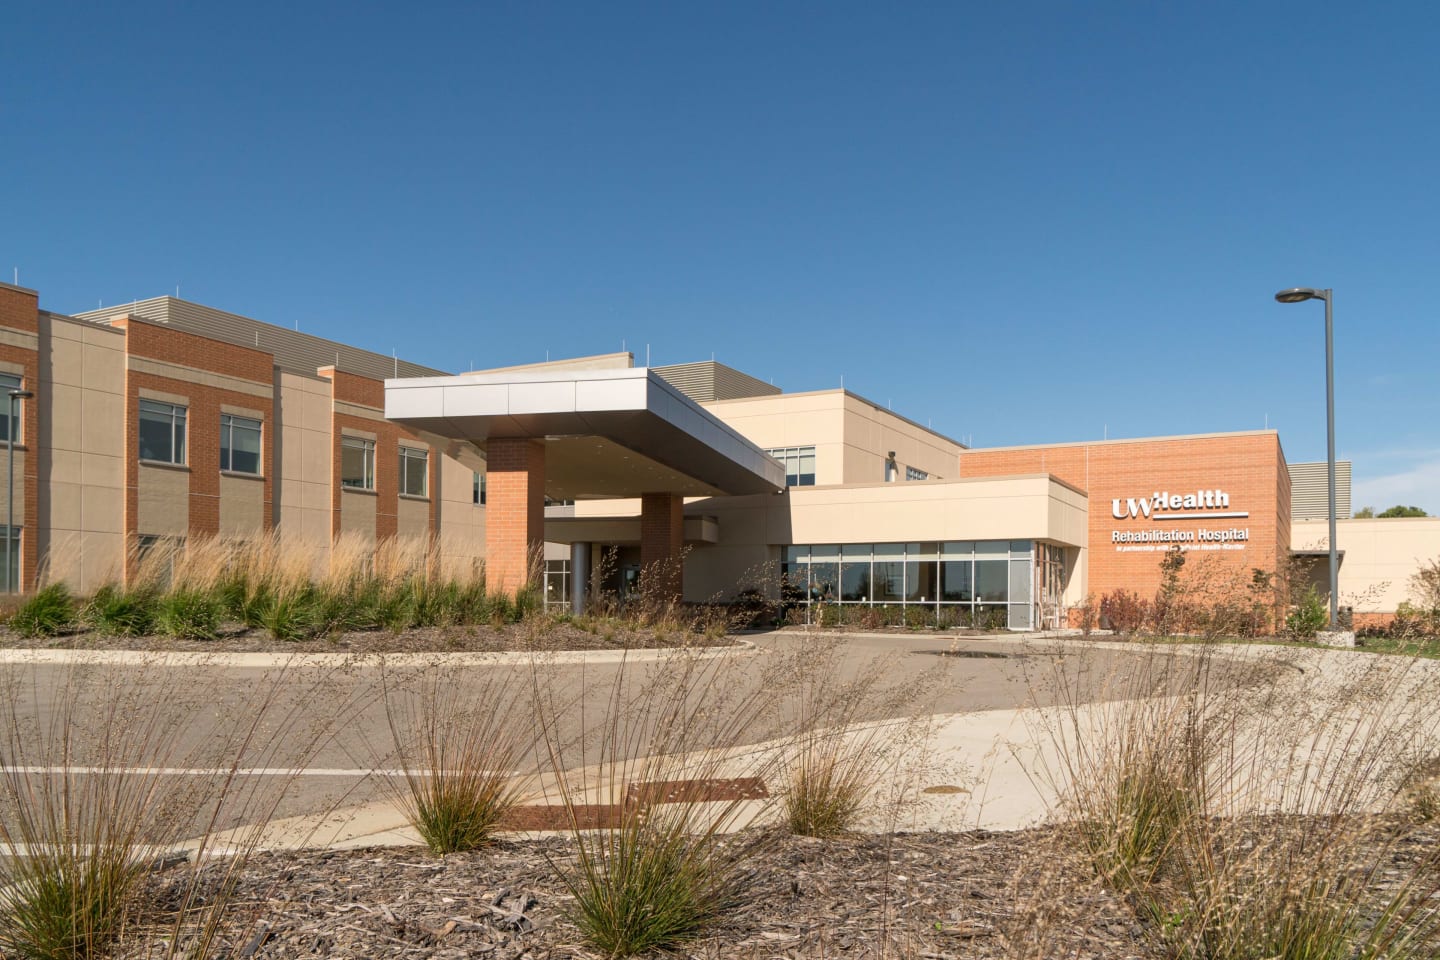 UW Health Rehabilitation Hospital building exterior